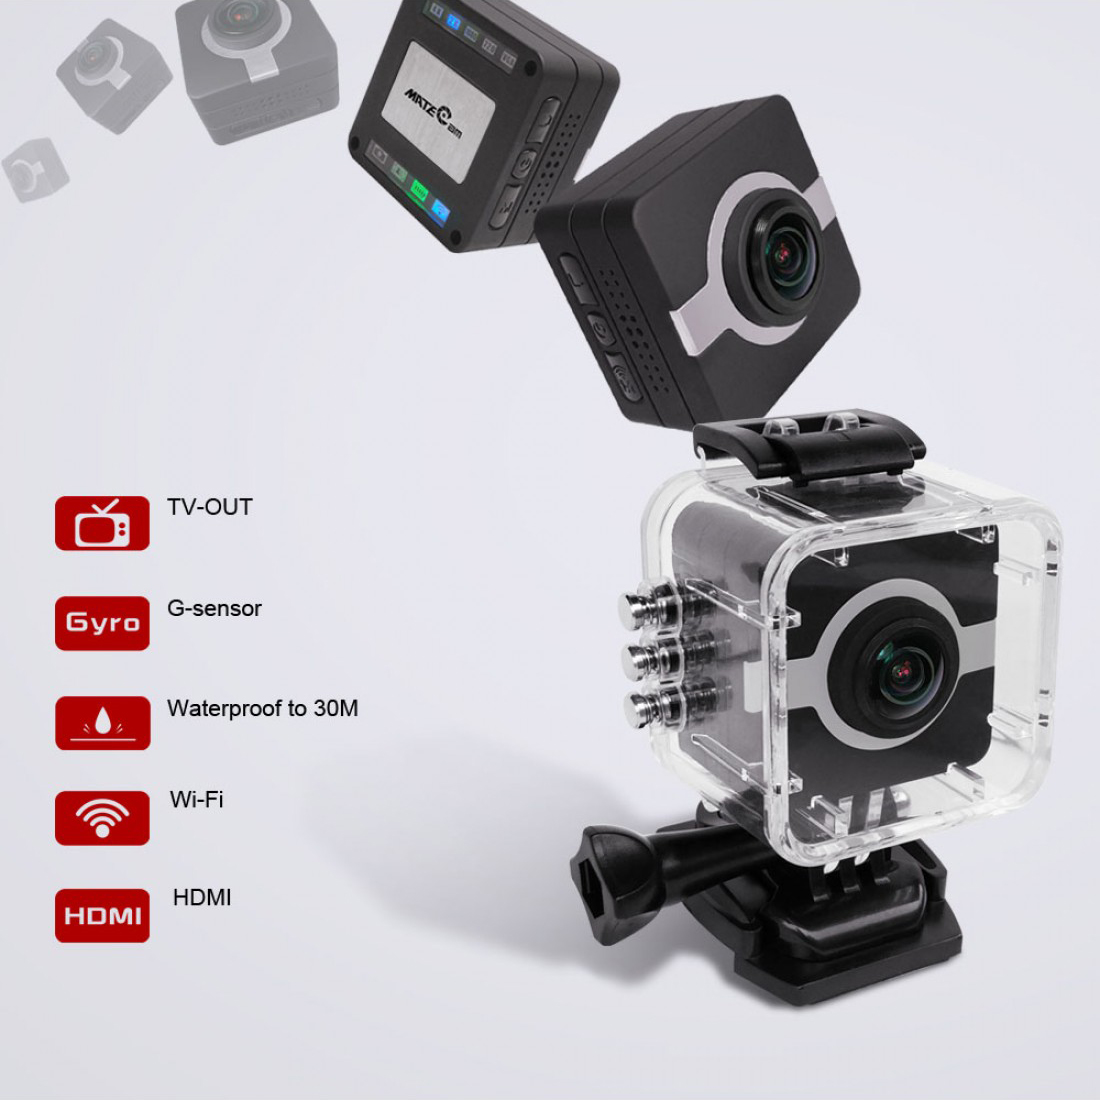 Matecam X1 4K Action Camera WIFI Sports Camera Ultra HD Waterproof Mini DV Camcorder Video Recorder Action Cam